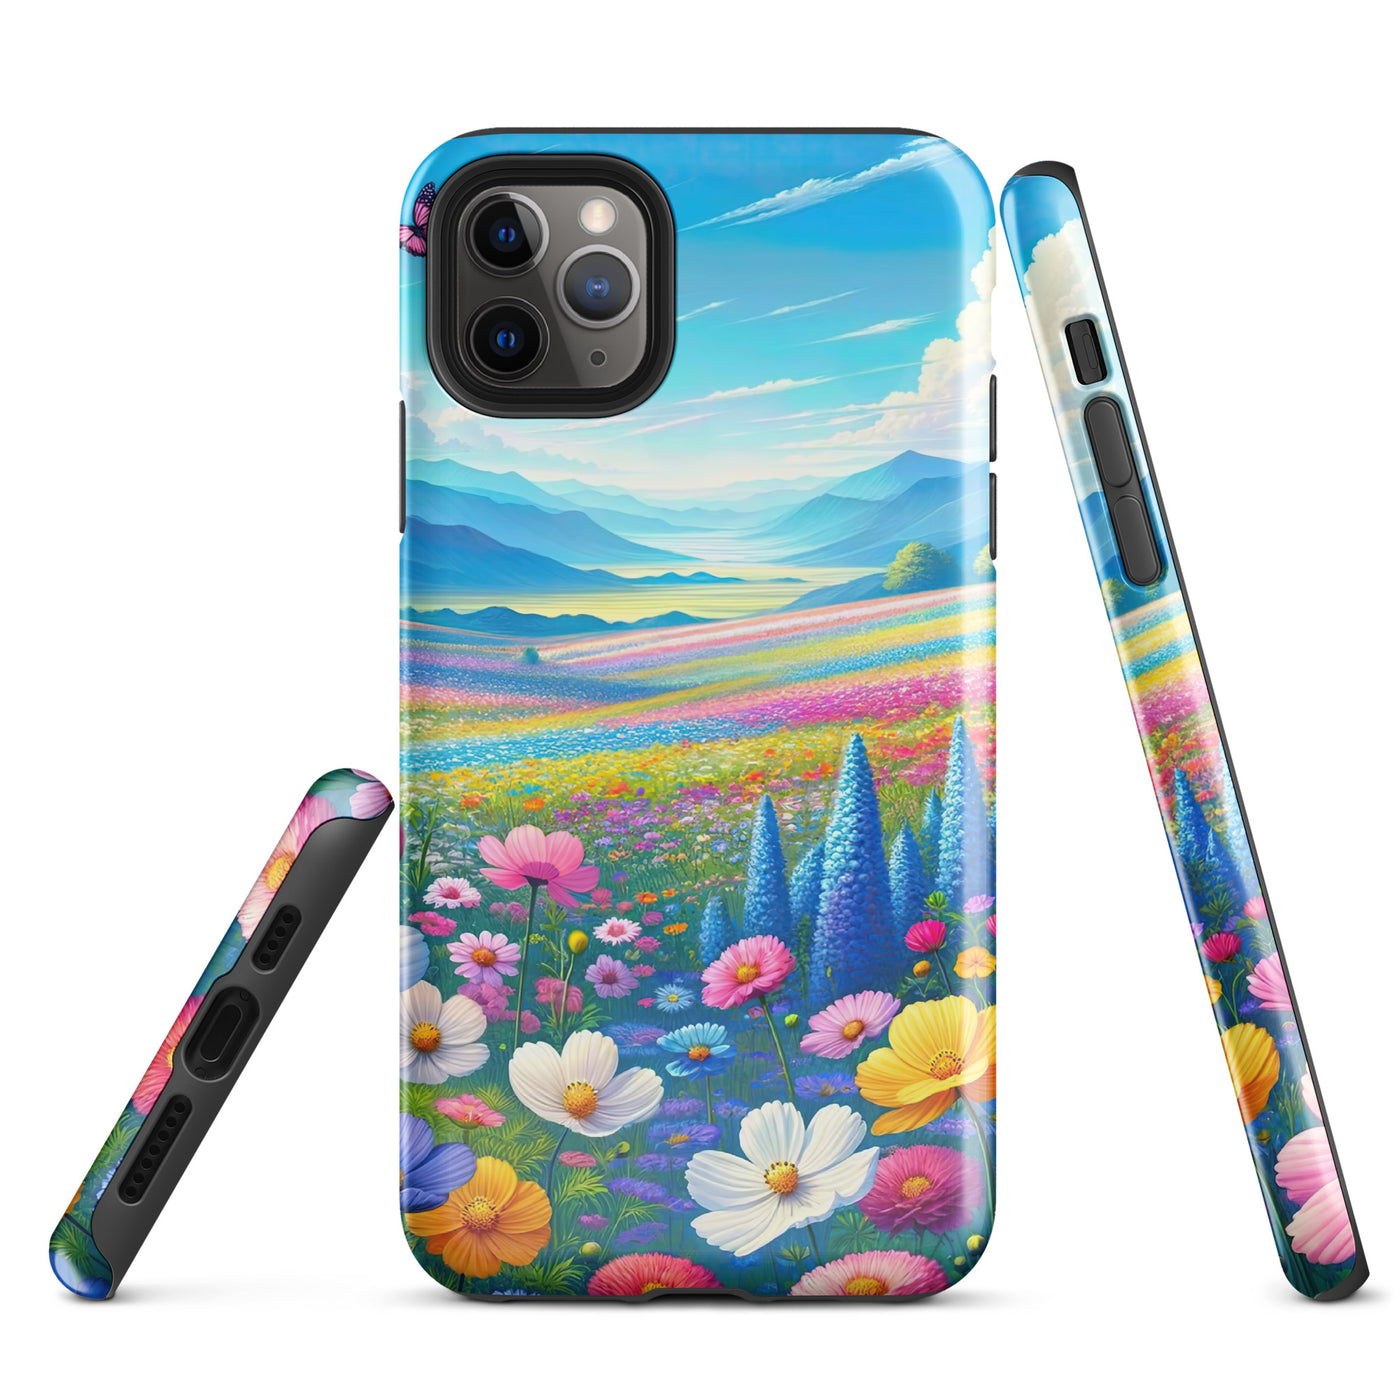 Weitläufiges Blumenfeld unter himmelblauem Himmel, leuchtende Flora - iPhone Schutzhülle (robust) camping xxx yyy zzz iPhone 11 Pro Max